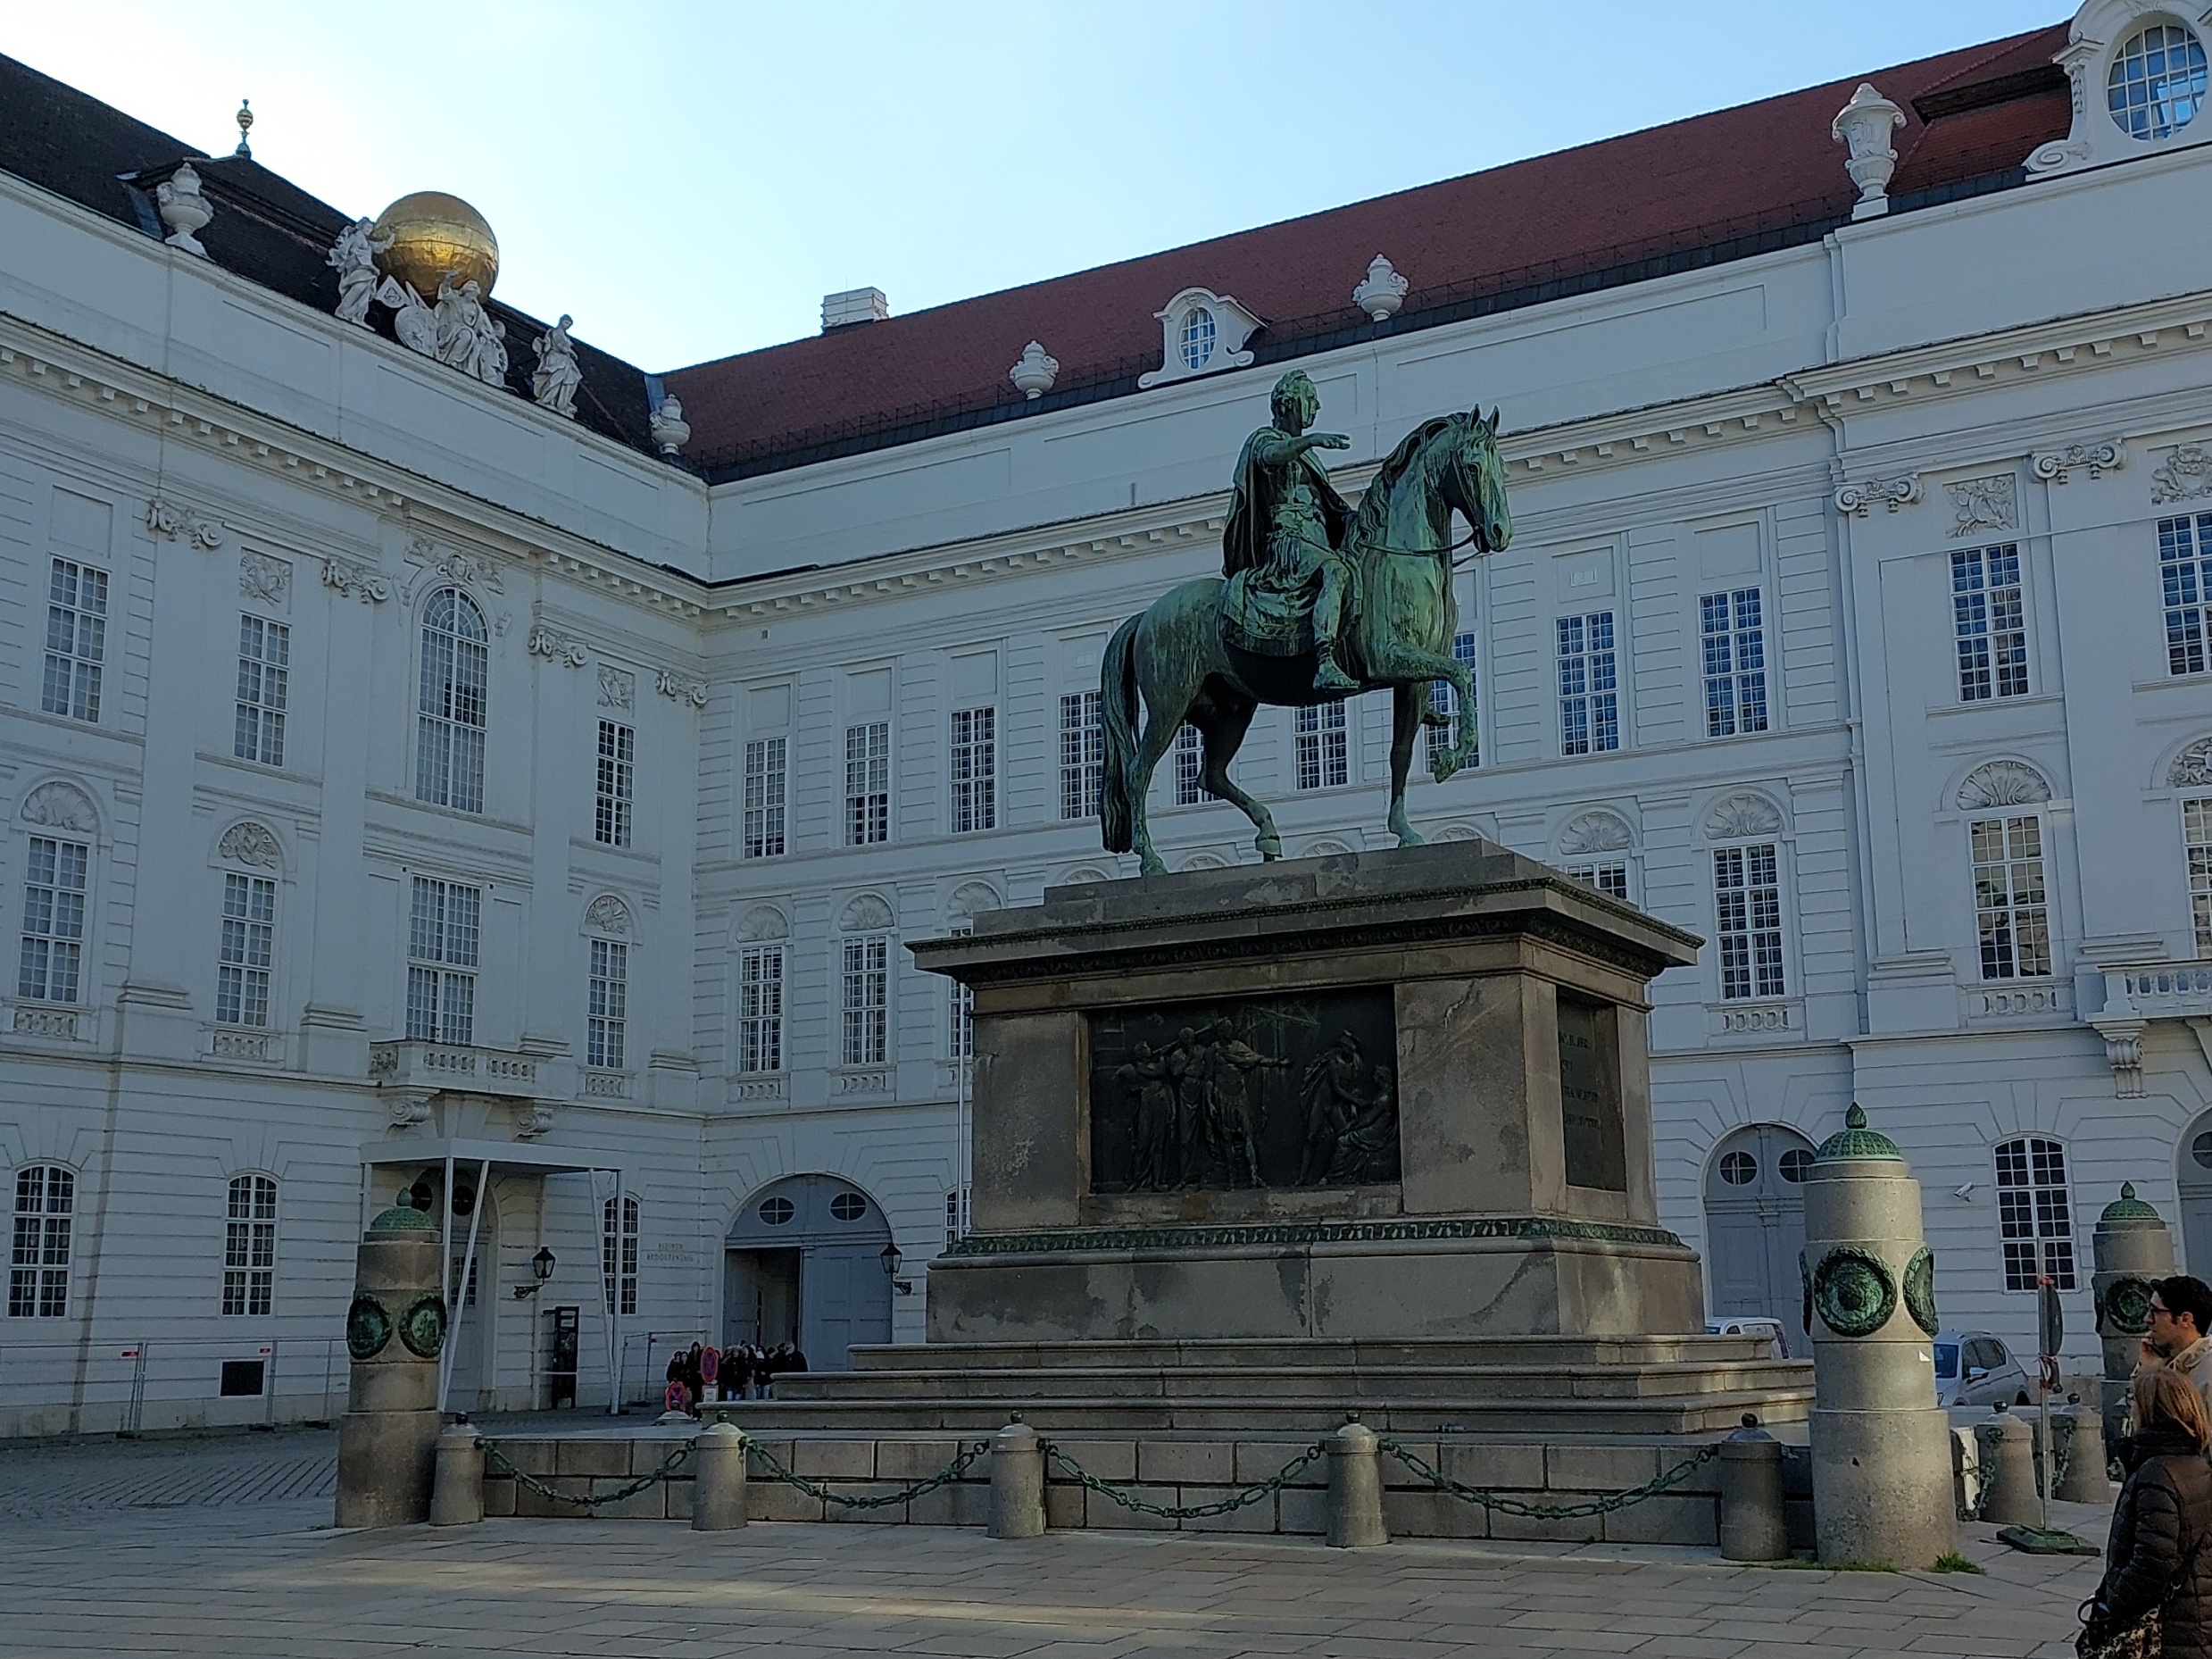 "Equestrian monument in an unidentified location" = Emperor Joseph II in the Josefsplatz, Vienna! rephoto